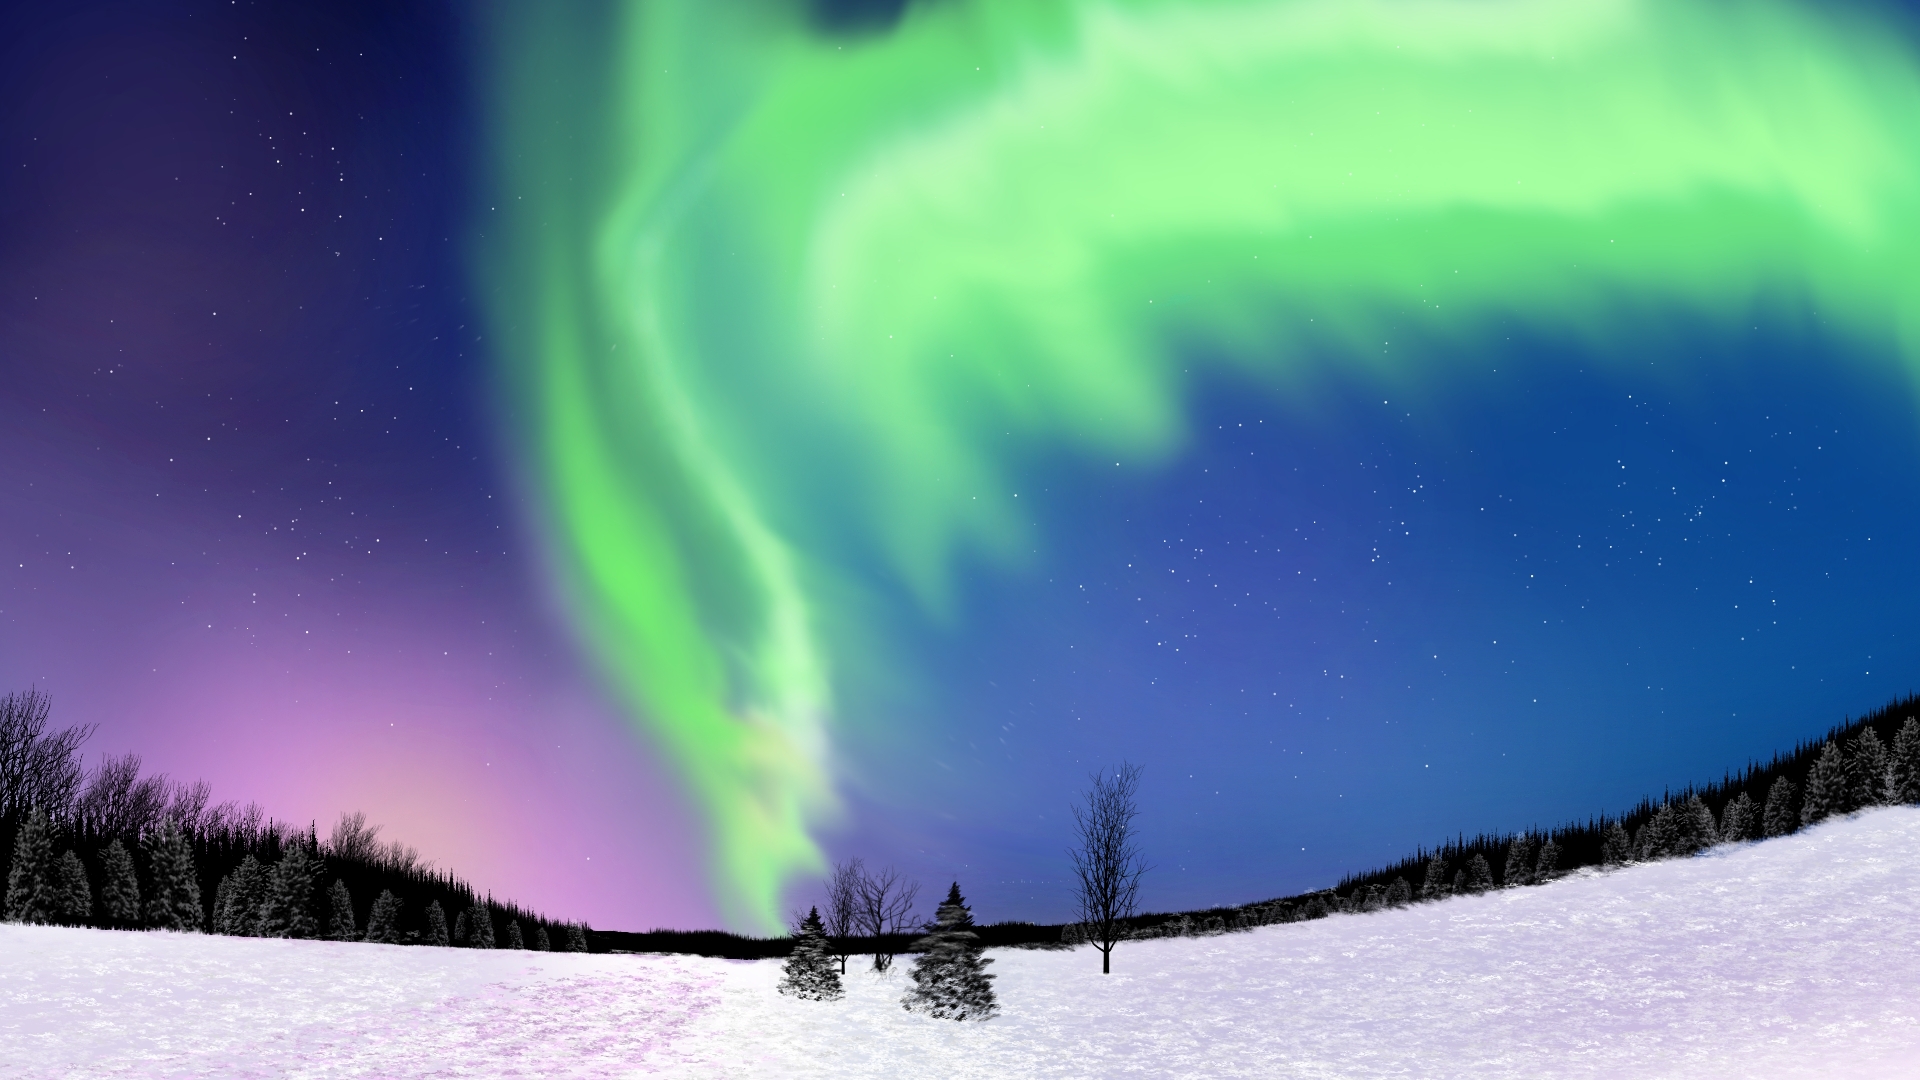 Digital Painting Digital Art Nature Landscape Winter Aurorae Starry Night 1920x1080